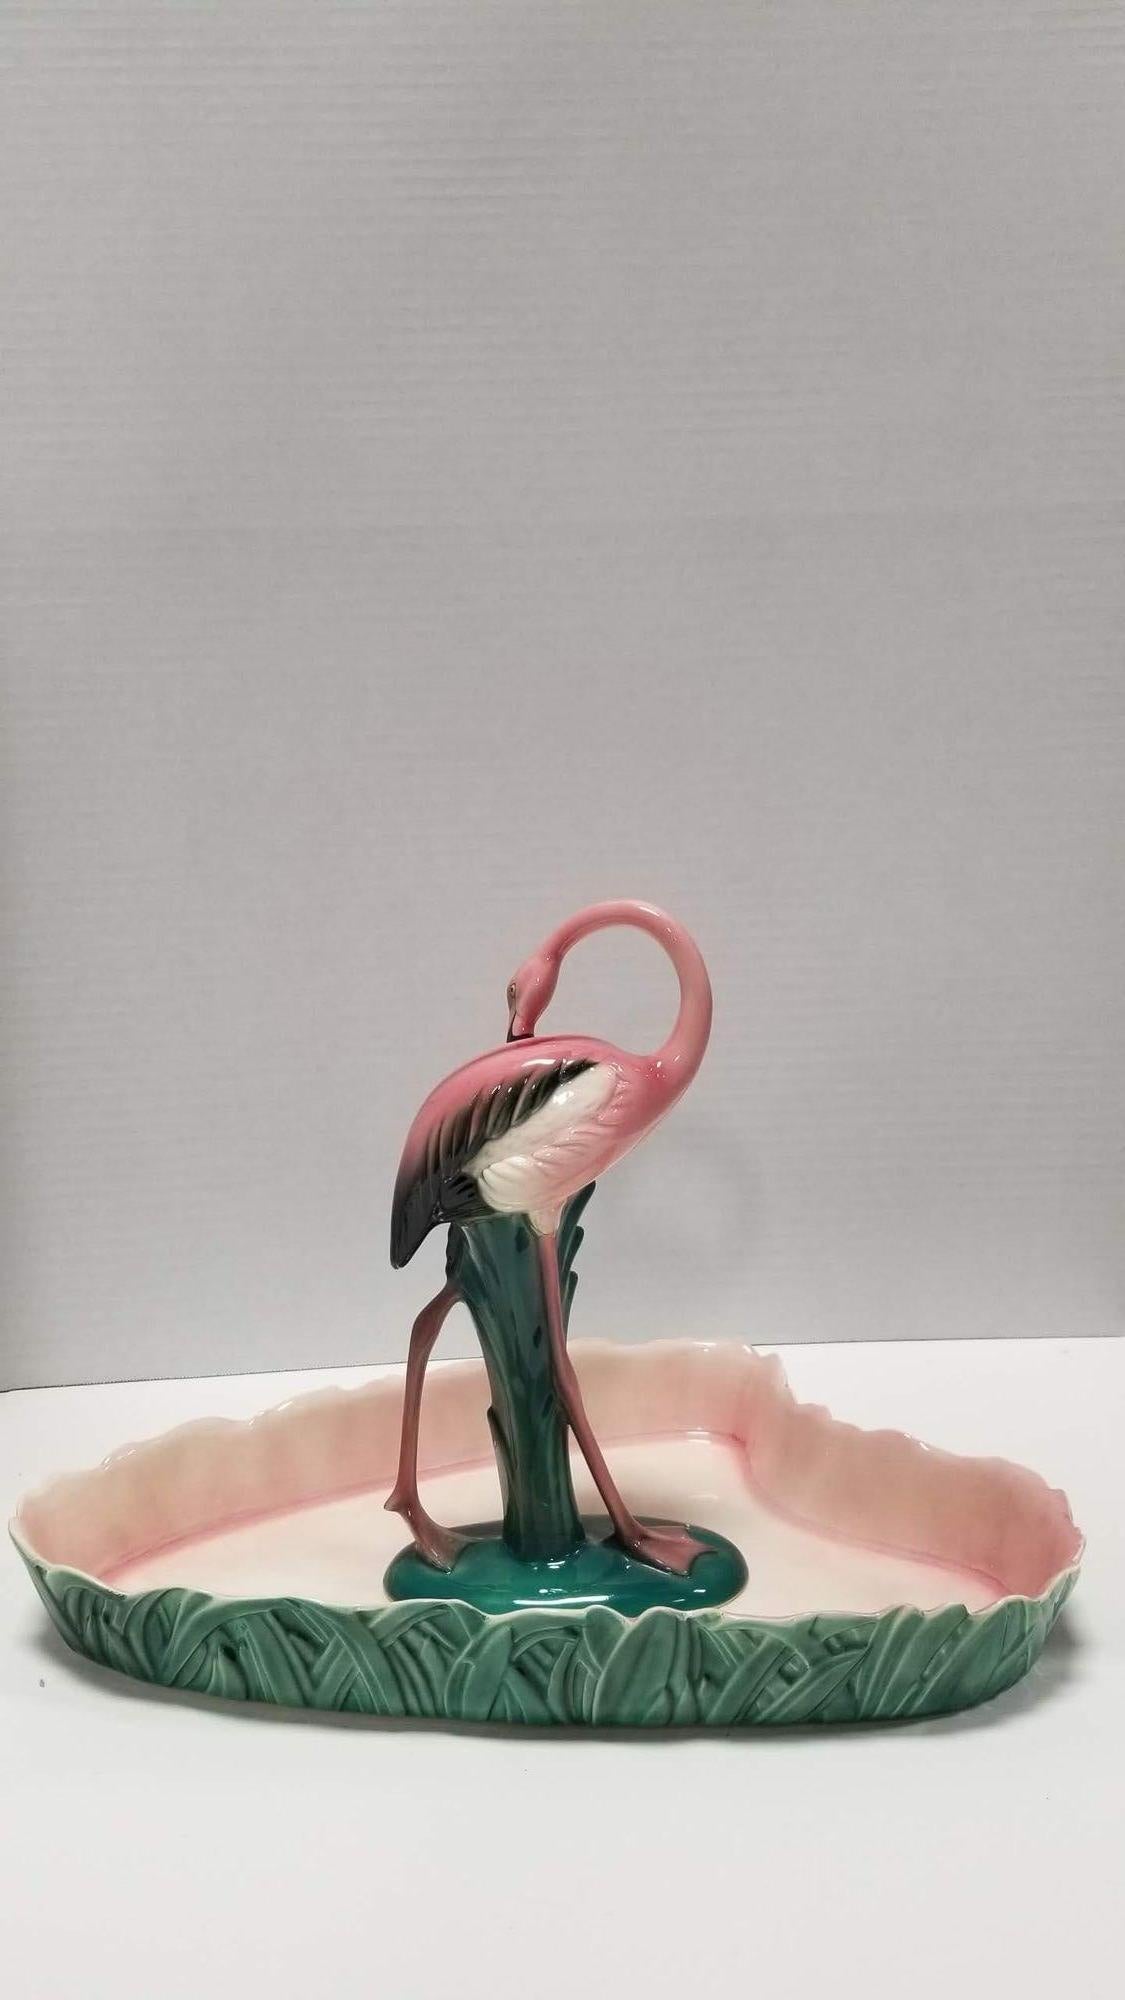 will george flamingo figurines